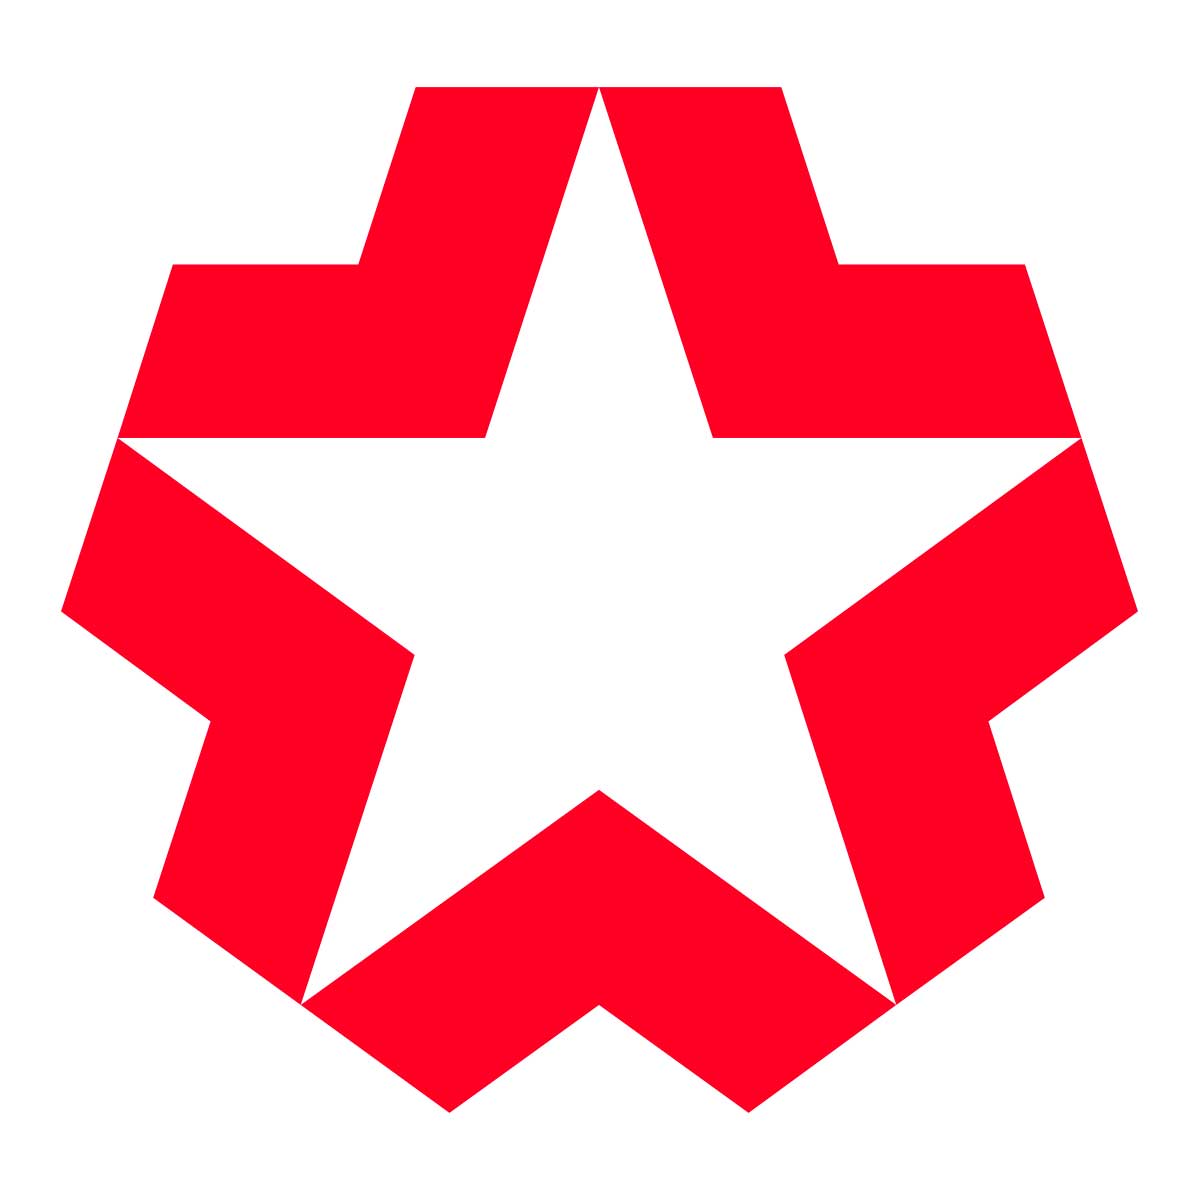 Logo Telemadrid